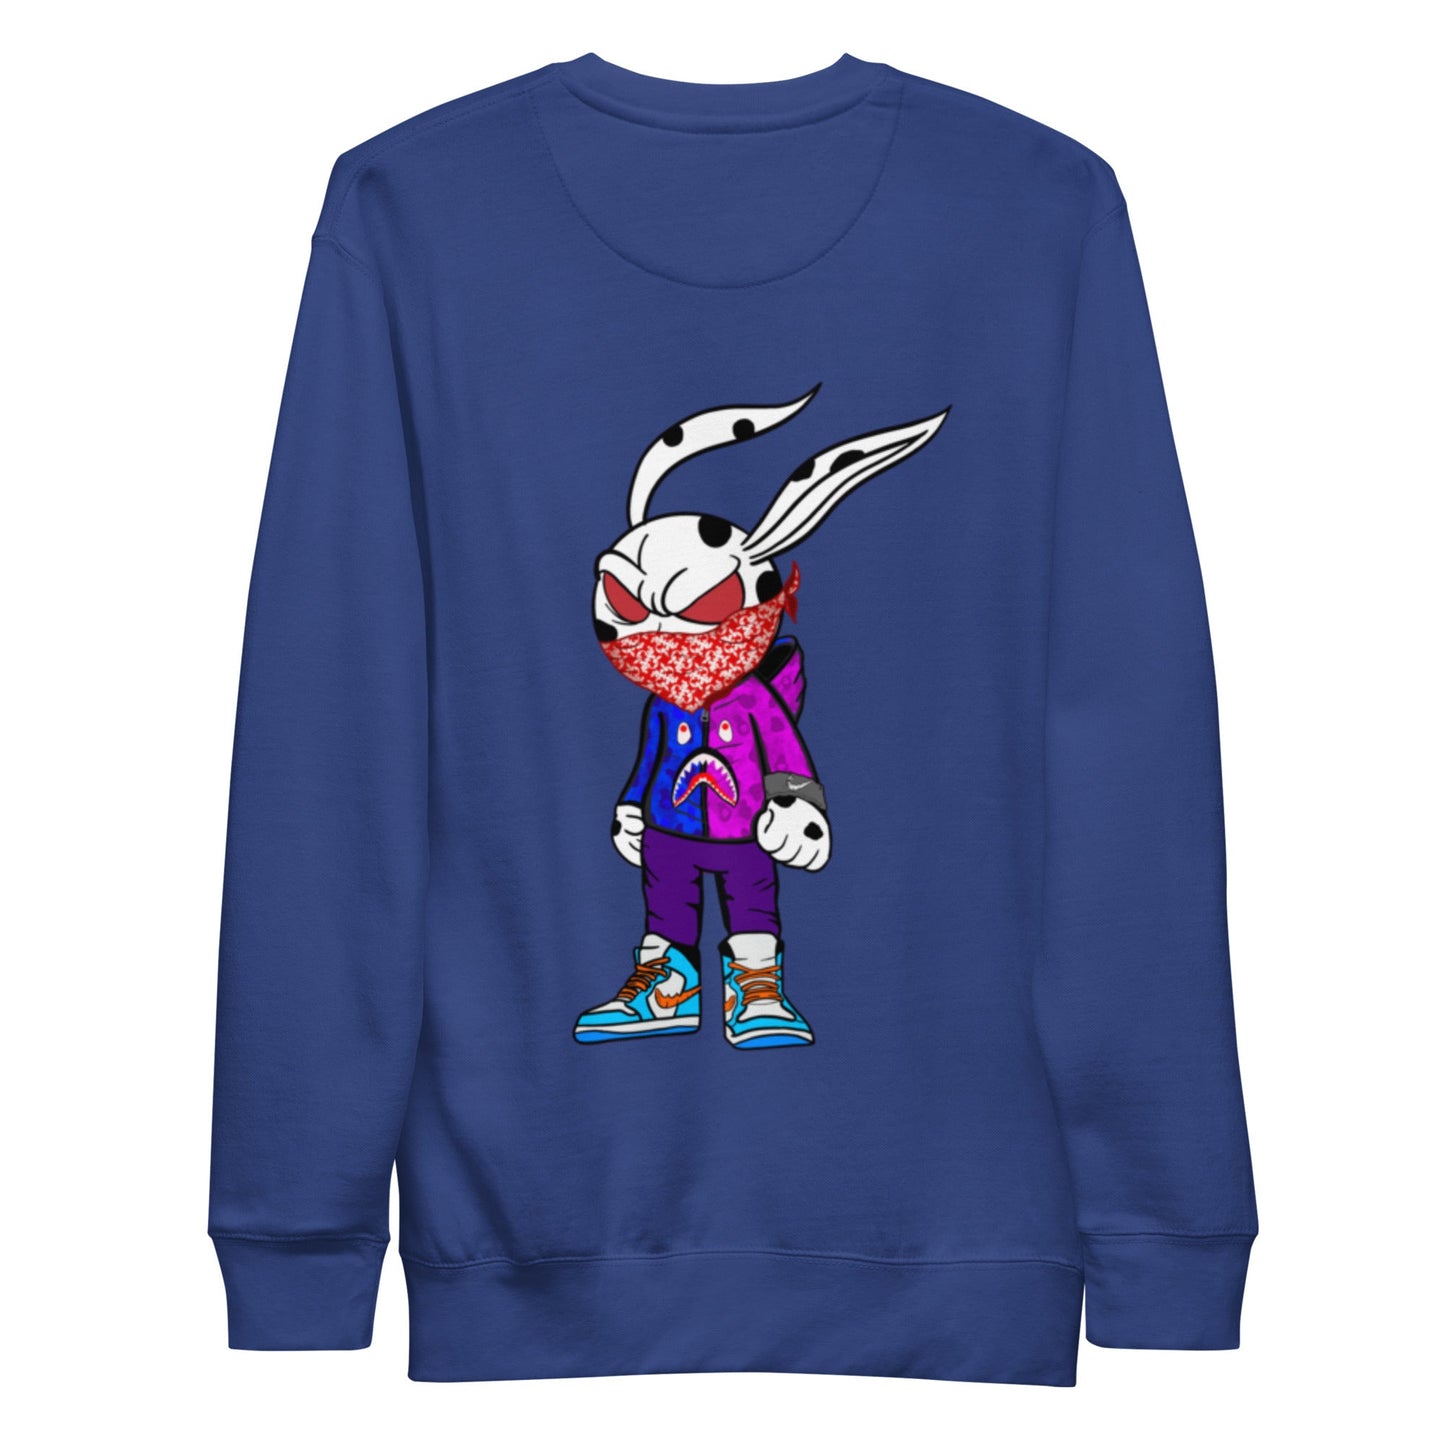 DOTS Style 4 Sweatshirt